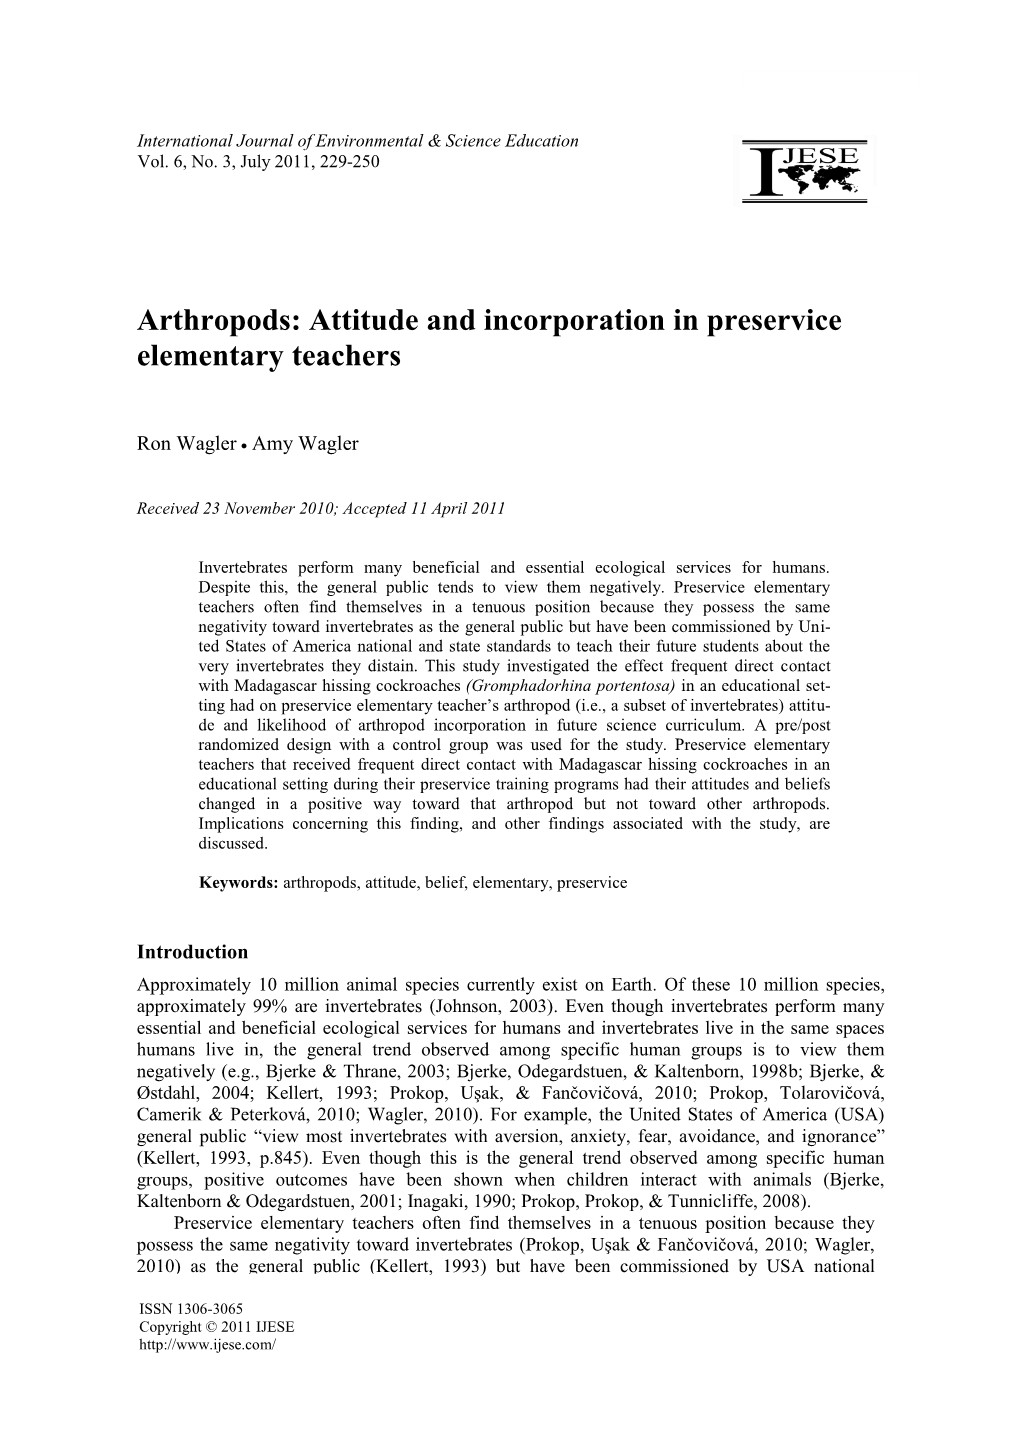 Arthropods: Attitude and Incorporation in Preservice Elementary Teachers